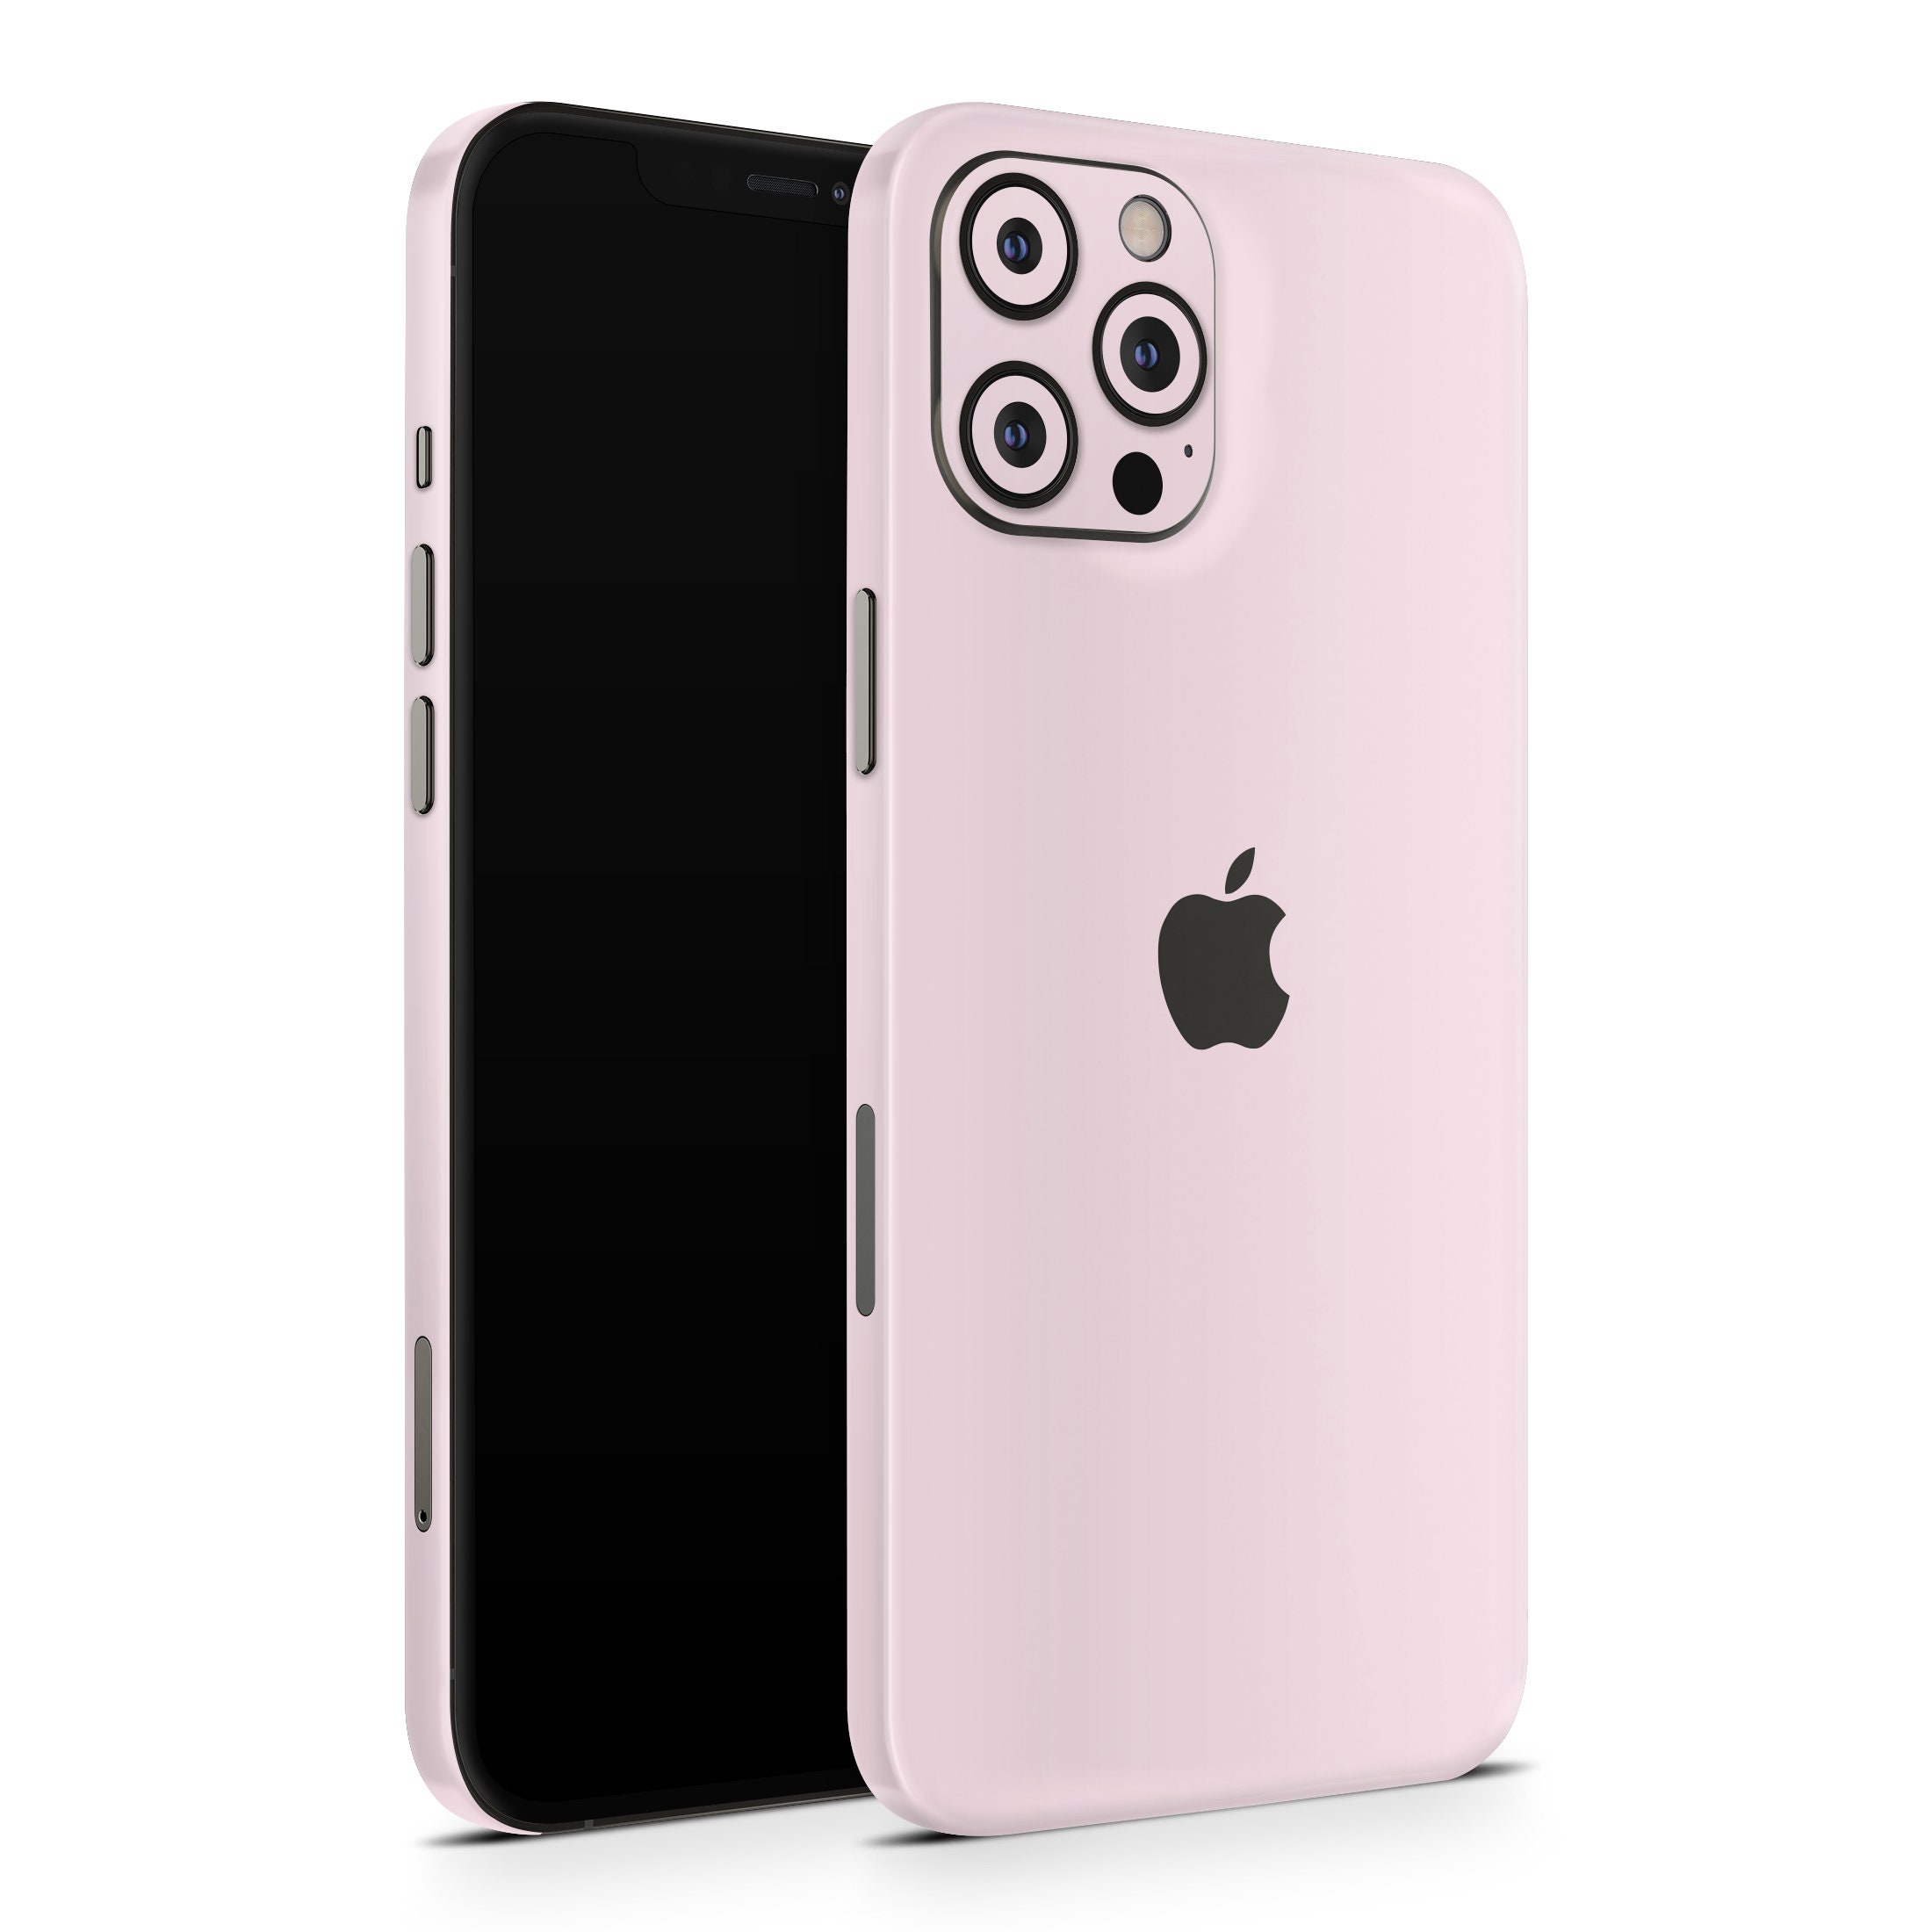 Funda de silicón iPhone XS Max - Amarillo pastel - Empresas - Apple (MX)